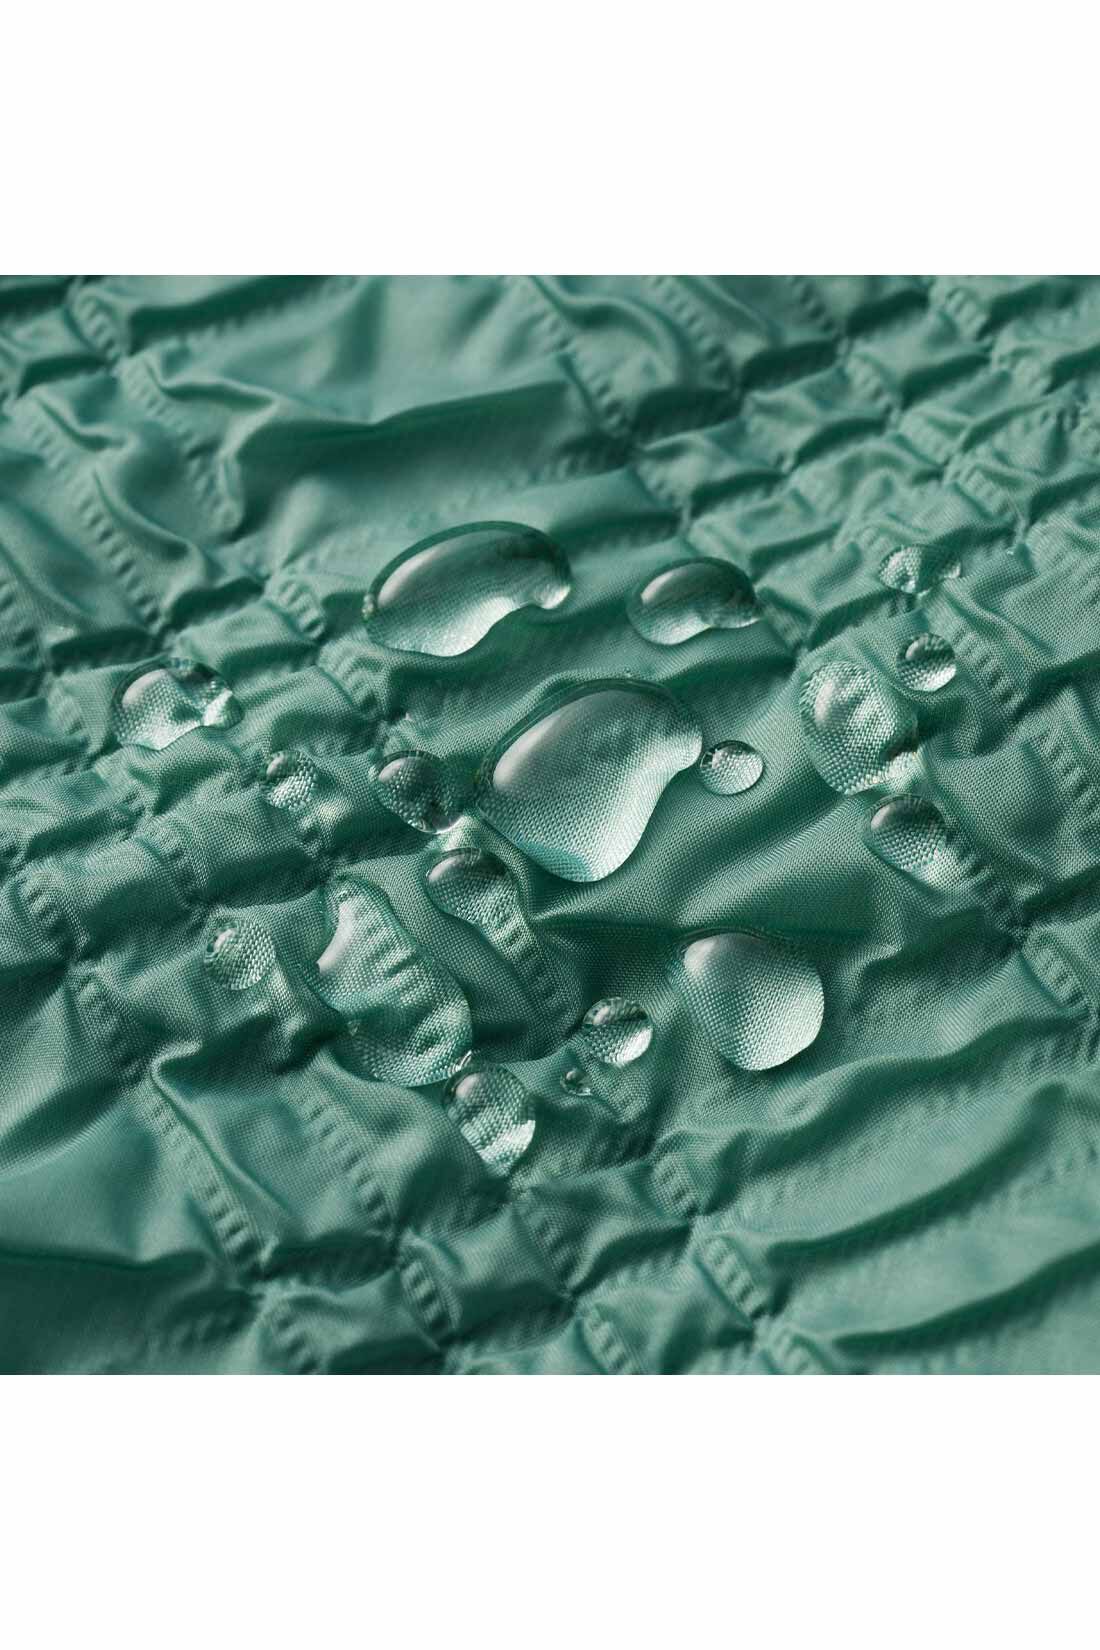 IEDIT[イディット]　エンボス加工をほどこした 撥水（はっすい）素材の切り替えスカート|撥水加工をほどこしたナイロン素材はテカリをおさえた上品な素材感。